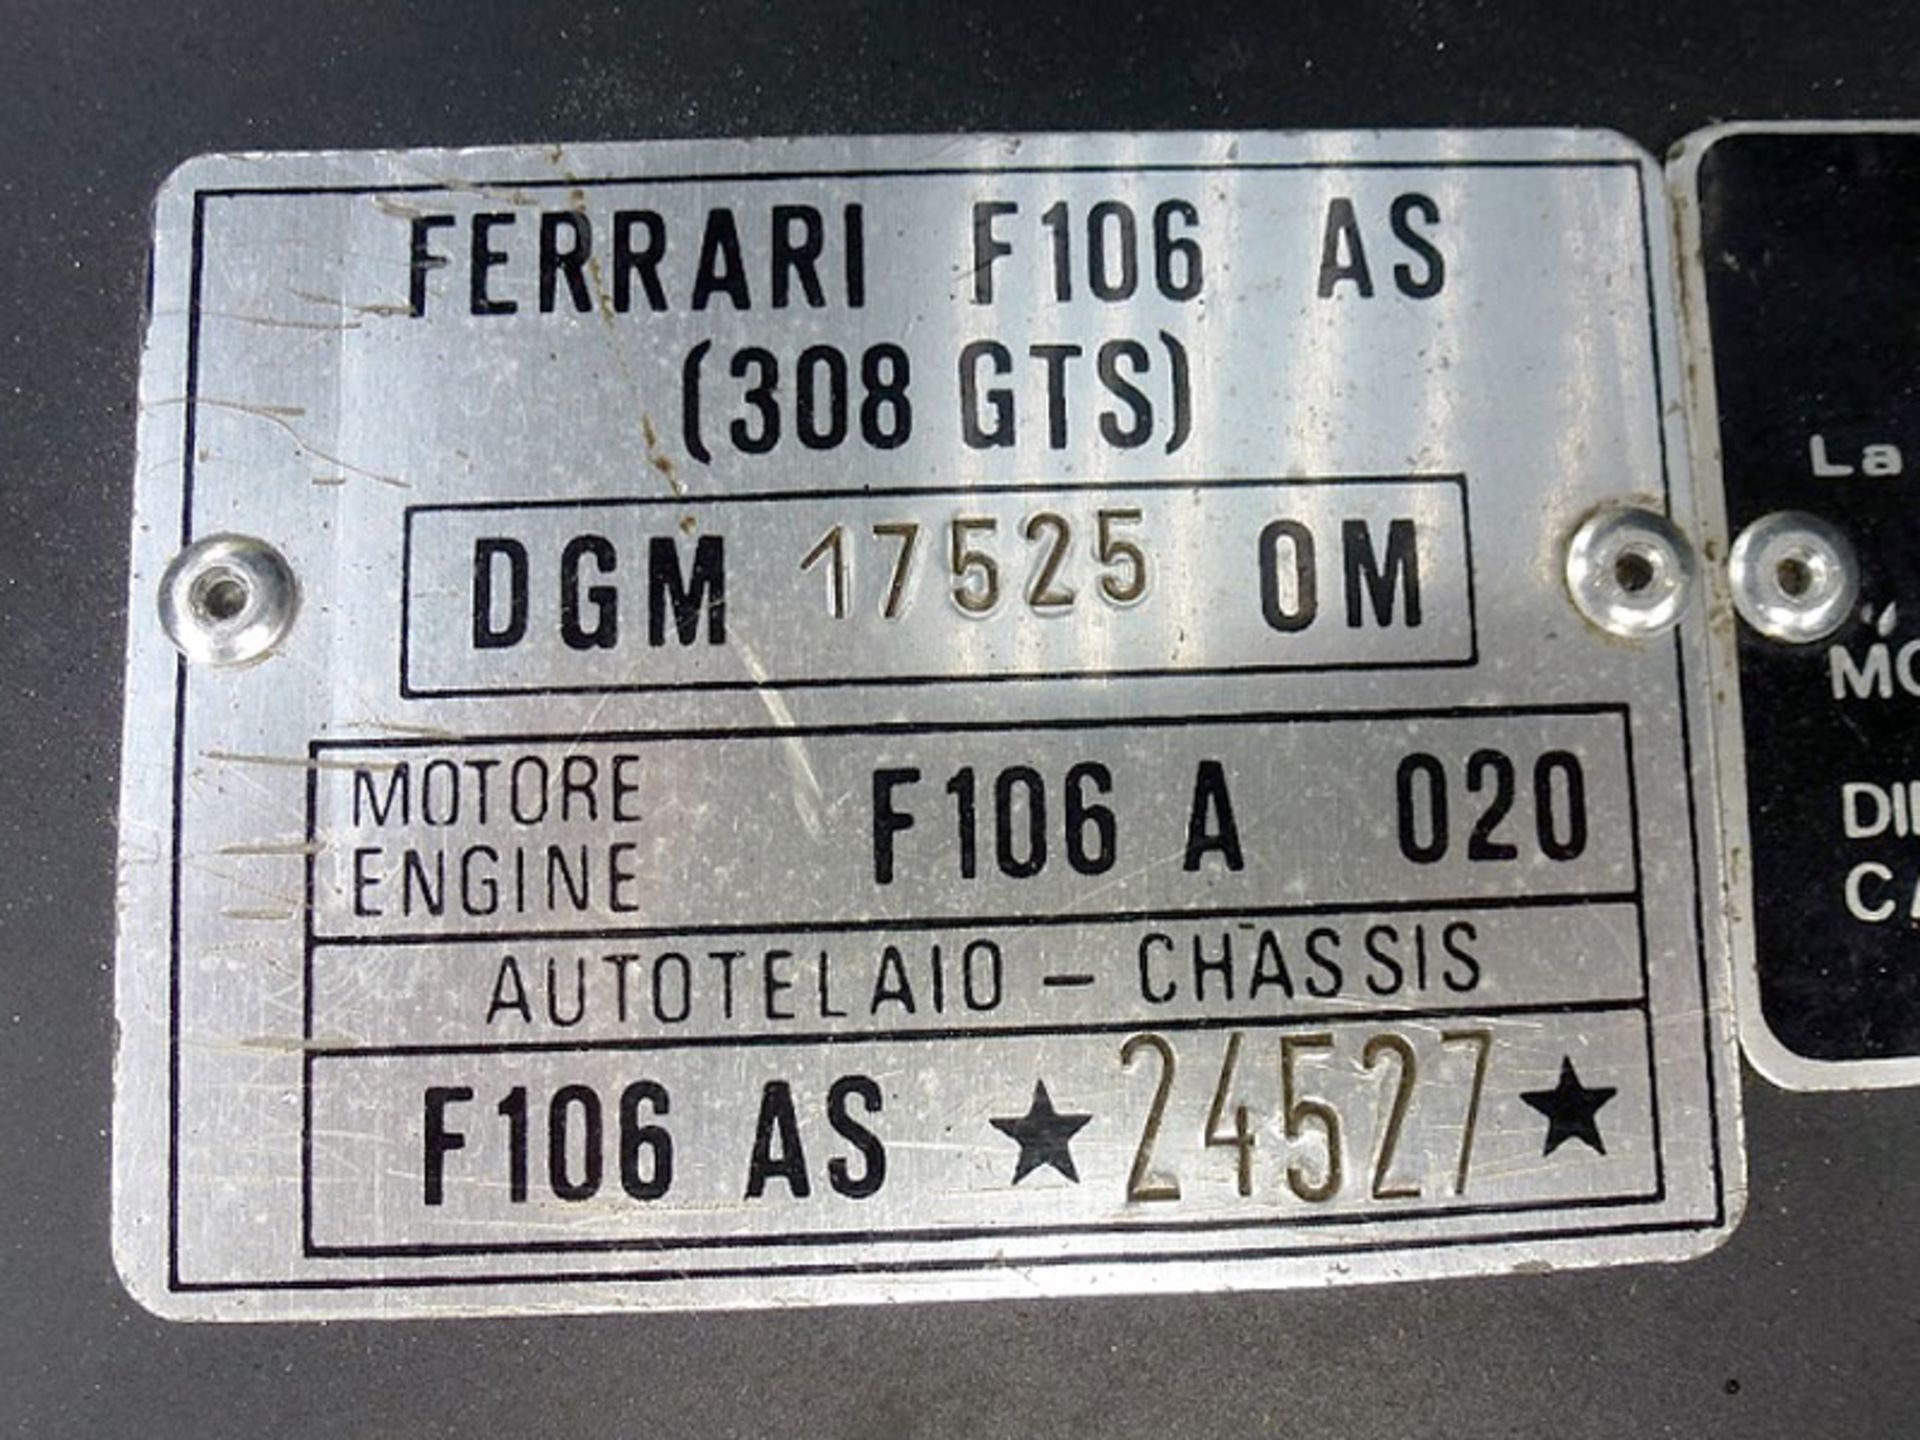 1978 Ferrari 308 GTS - Image 7 of 8